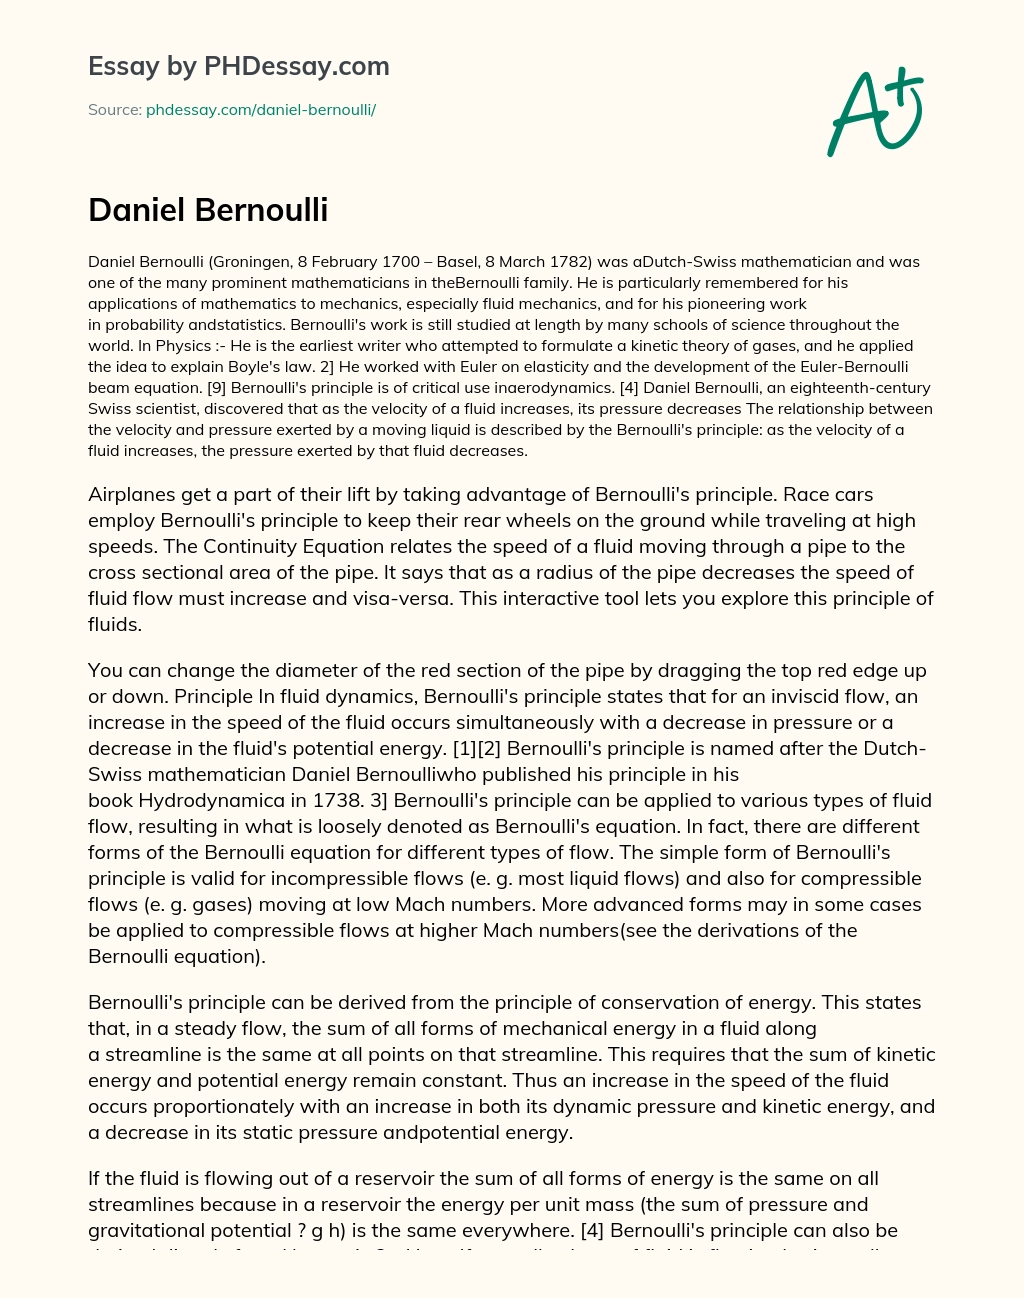 Daniel Bernoulli essay